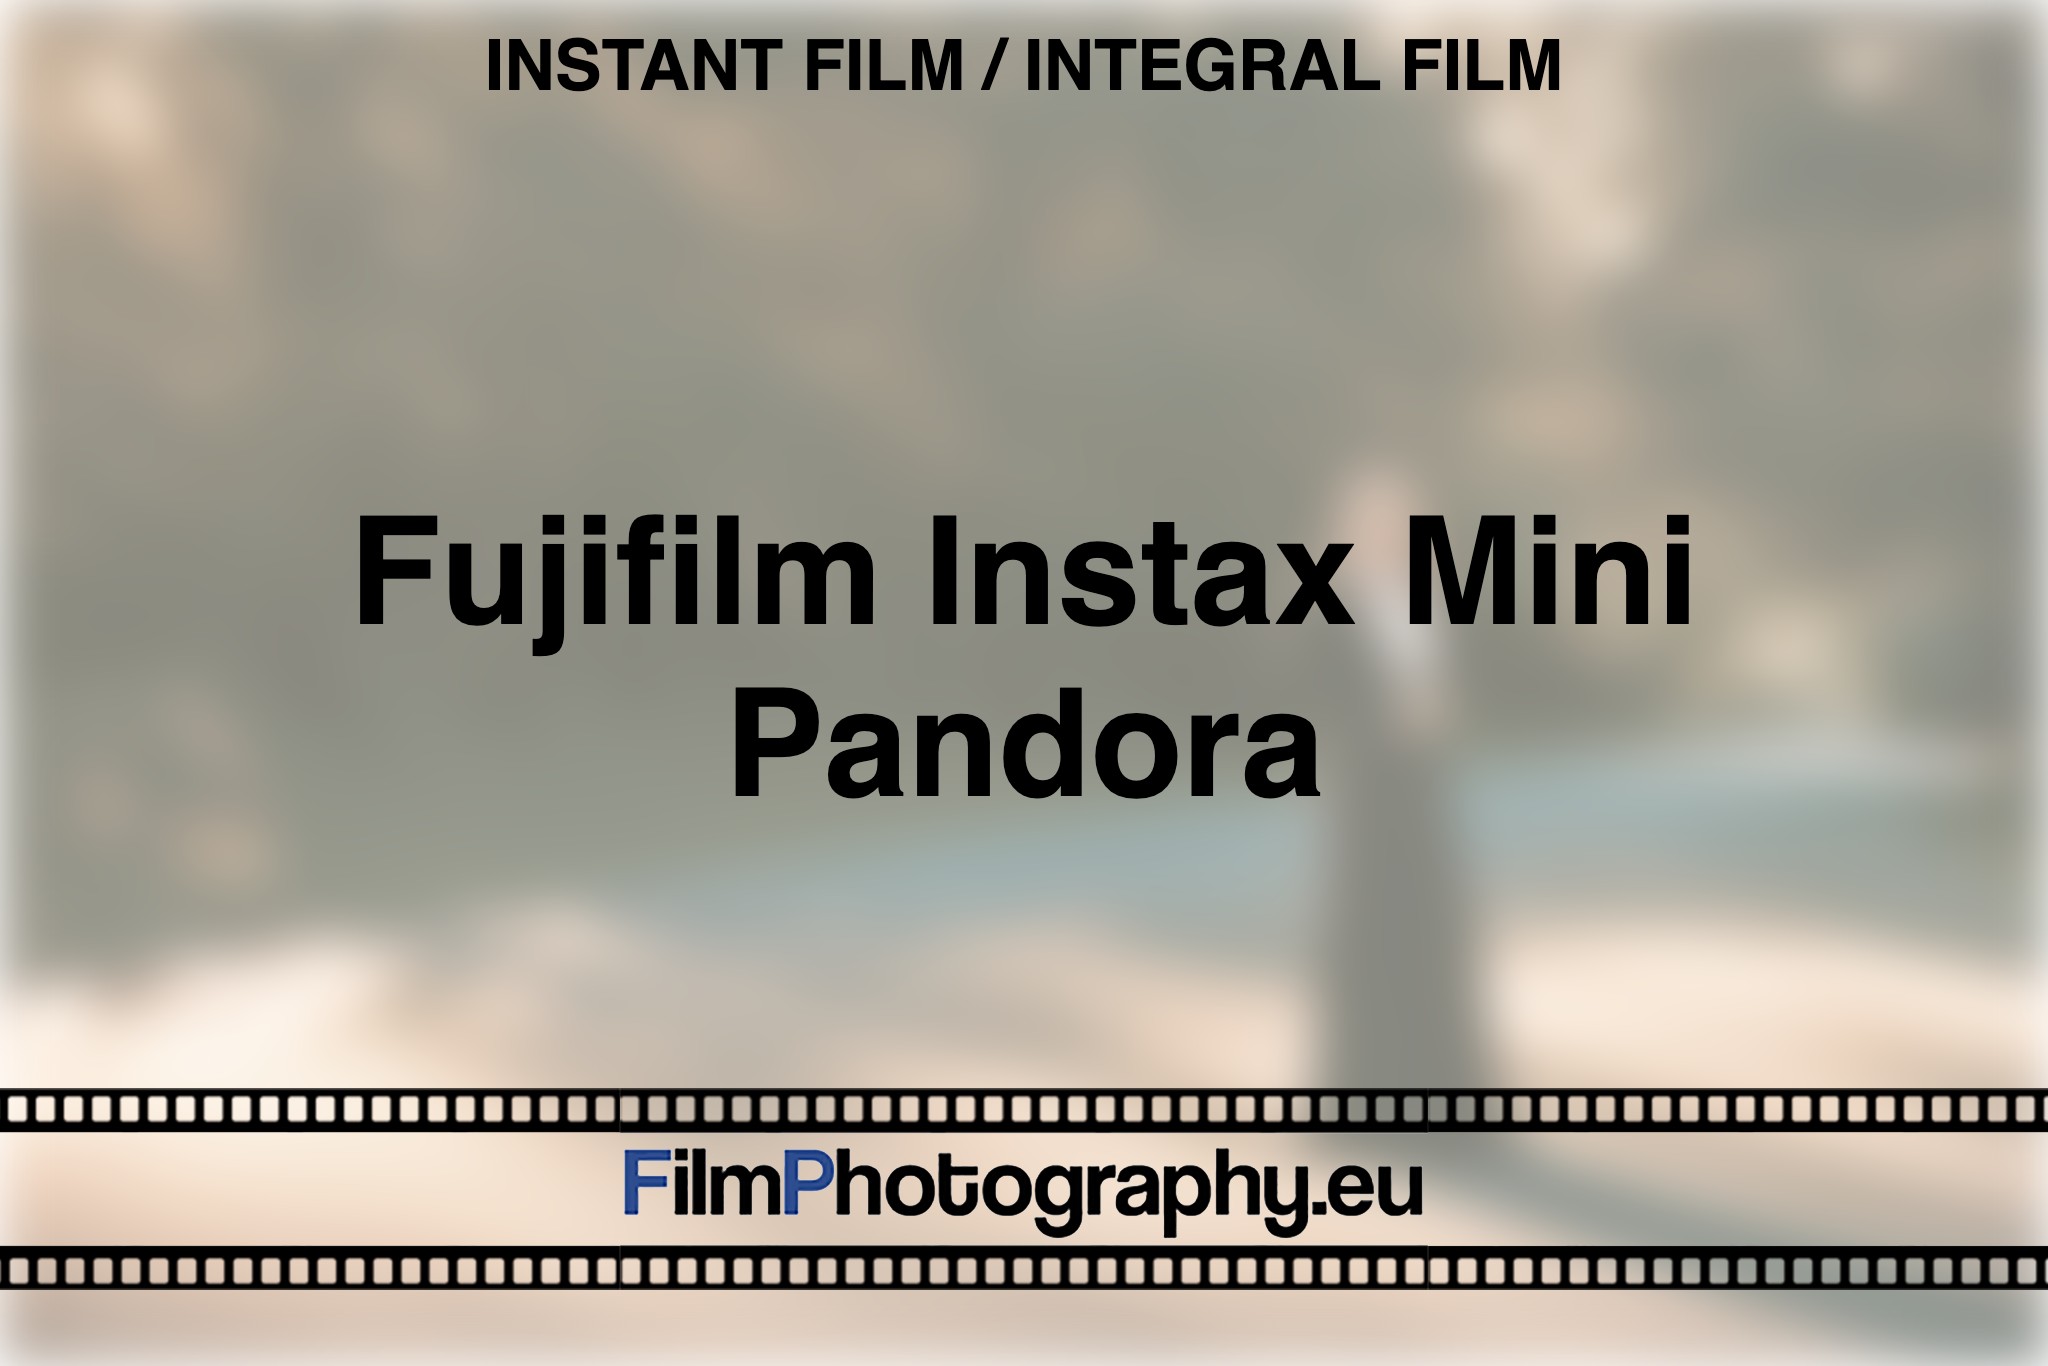 fujifilm-instax-mini-pandora-instant-film-integral-film-bnv